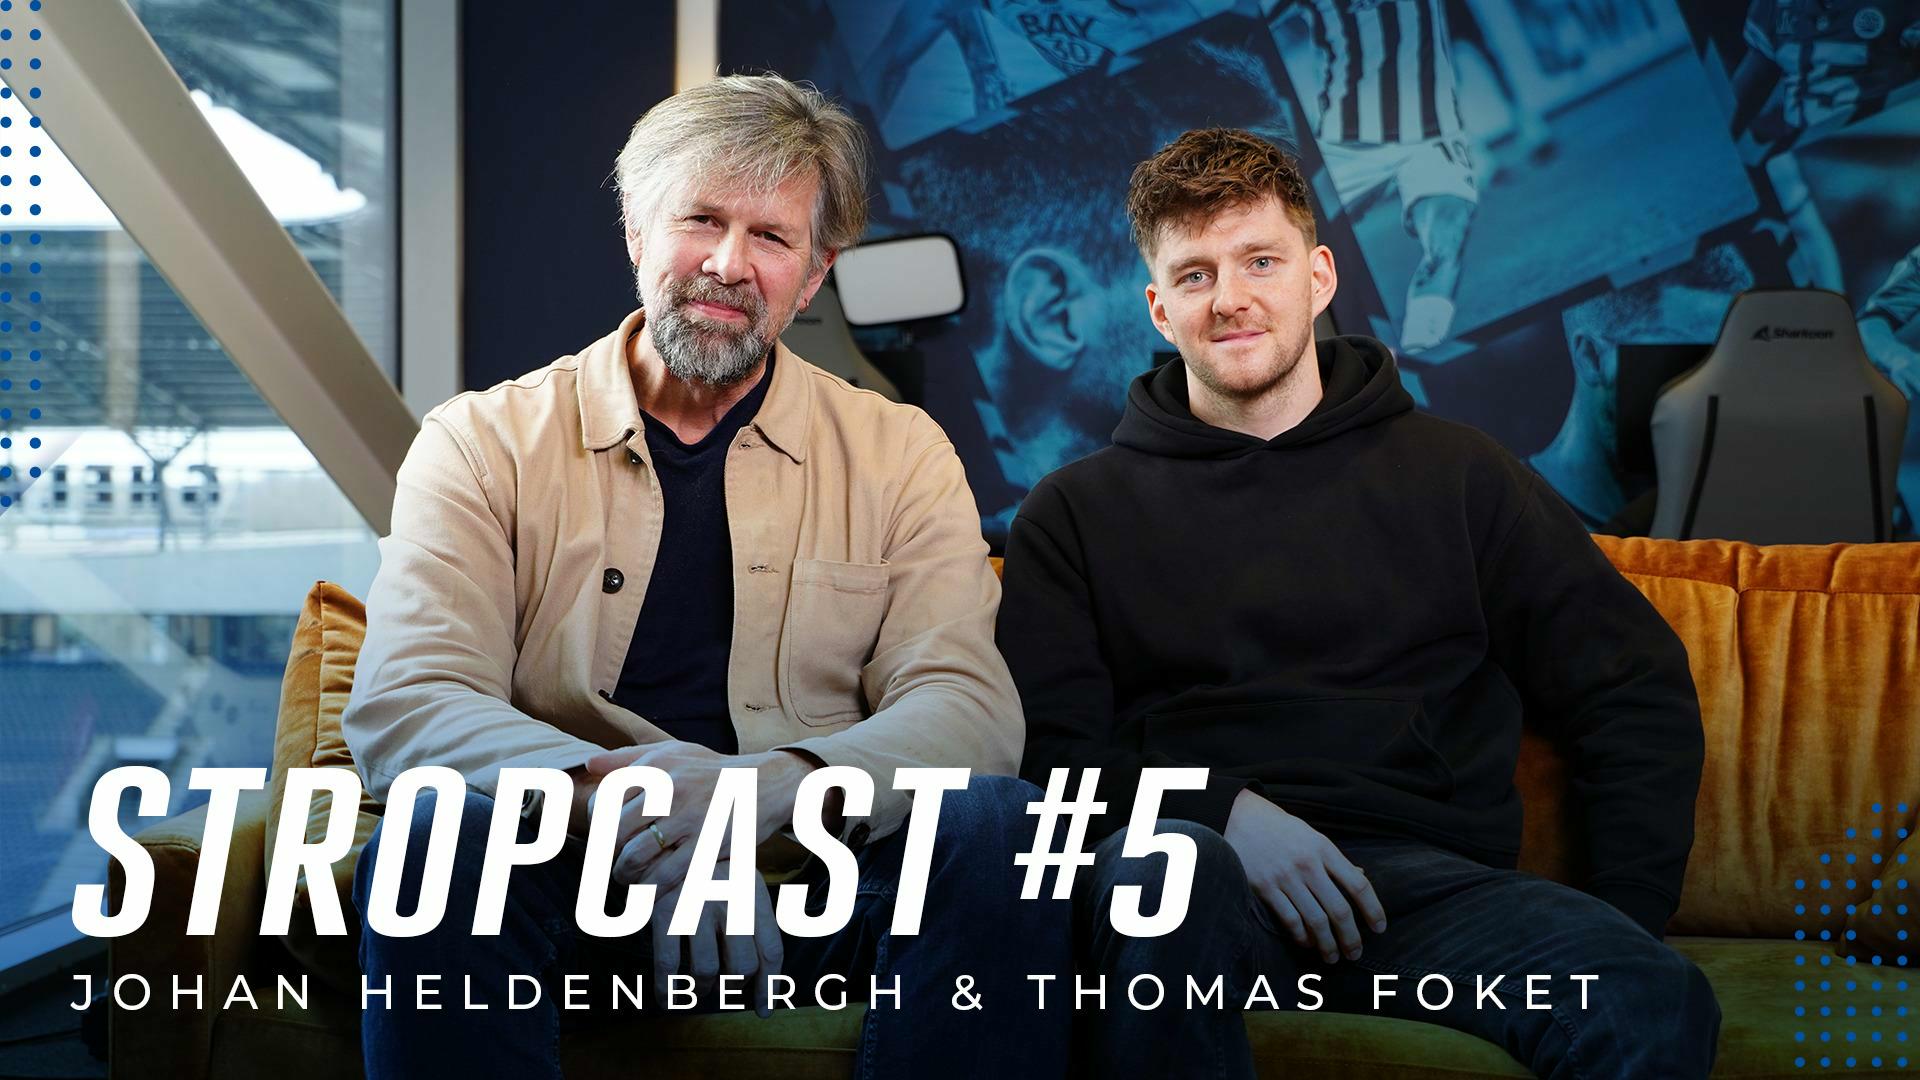 Beluister nu Stropcast #5 met Johan Heldenbergh & Thomas Foket!